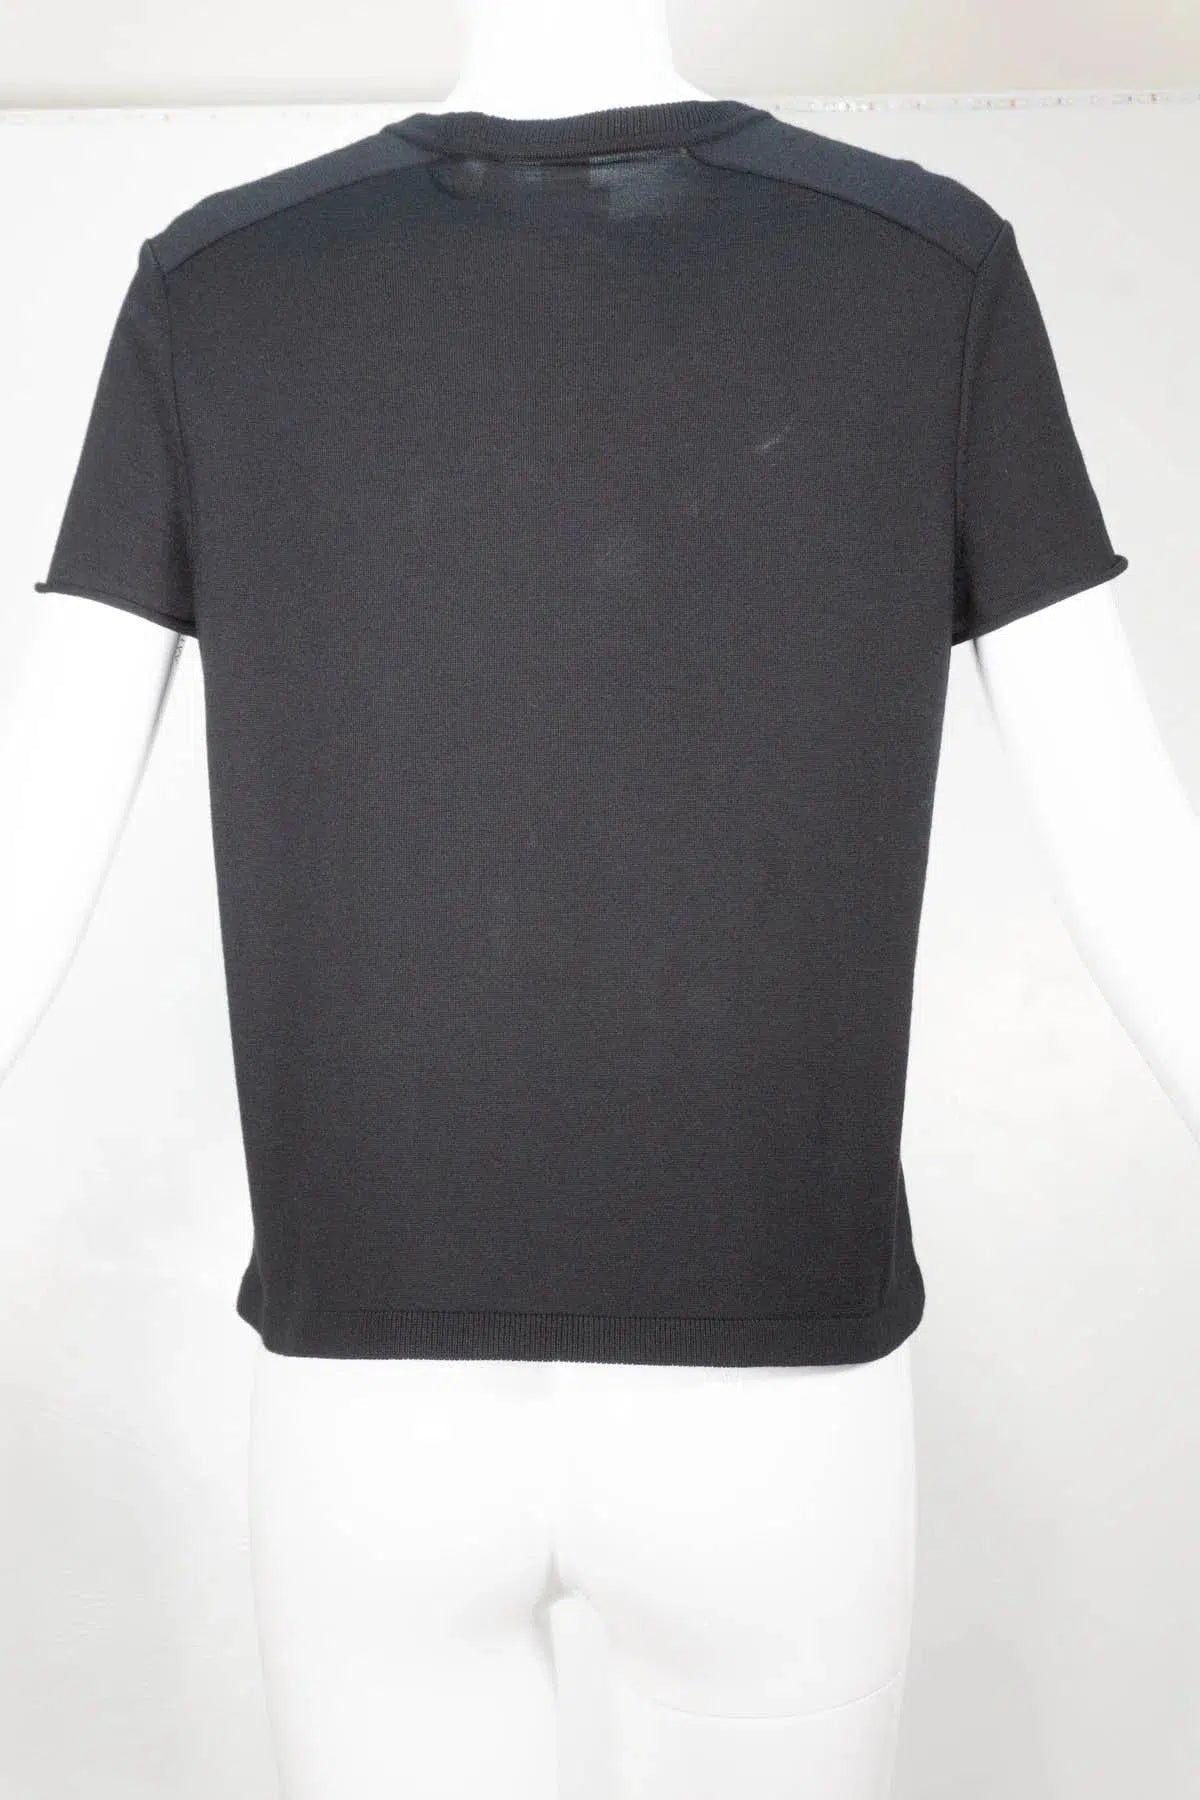 Hermès Astrology Remix Silk Panel Knit Shirt NWT Size 38/M